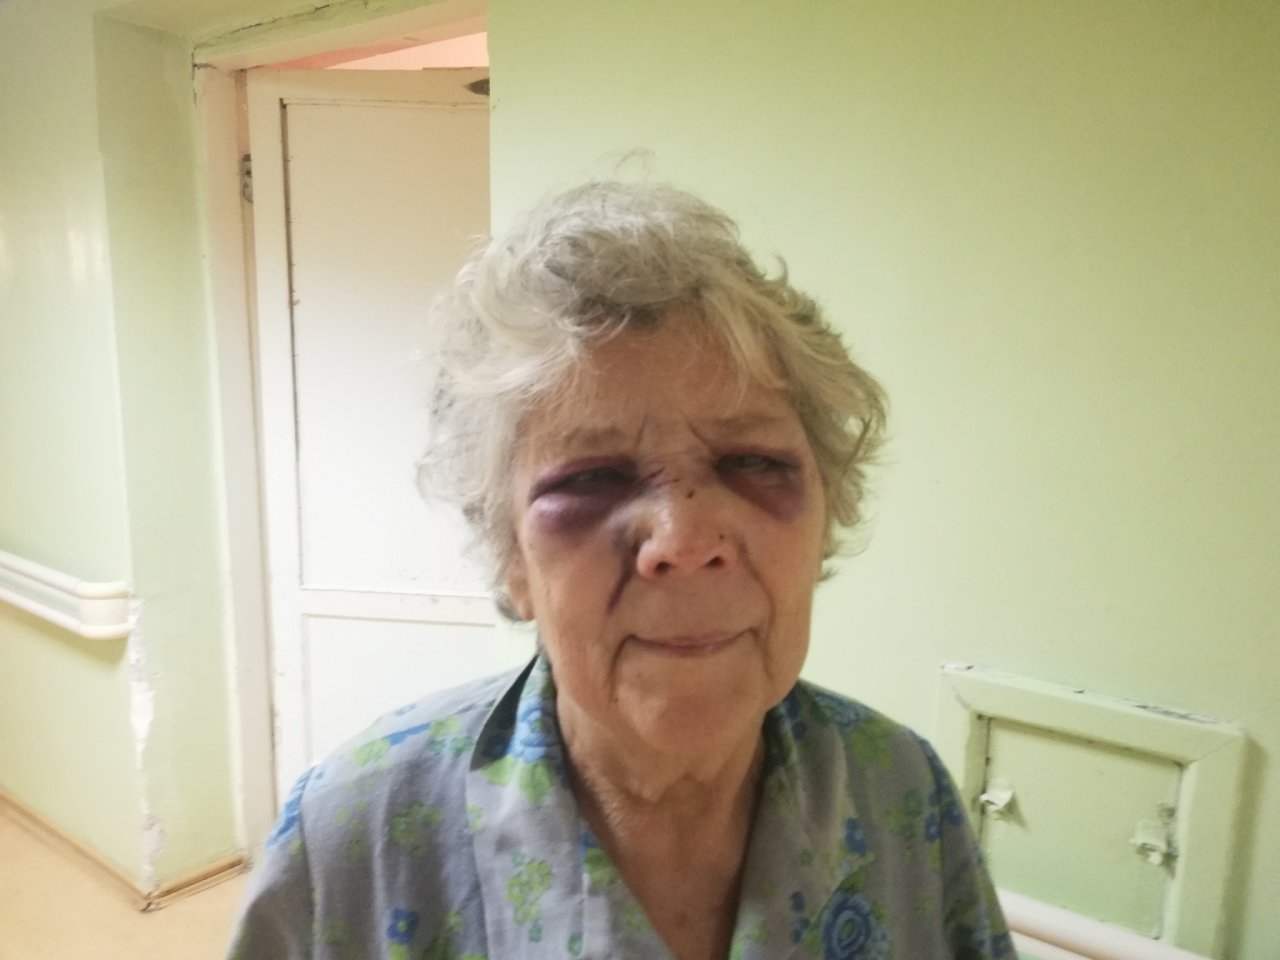 Избитая бабушка: "Он схватил серый камень и начал бить меня по лицу"